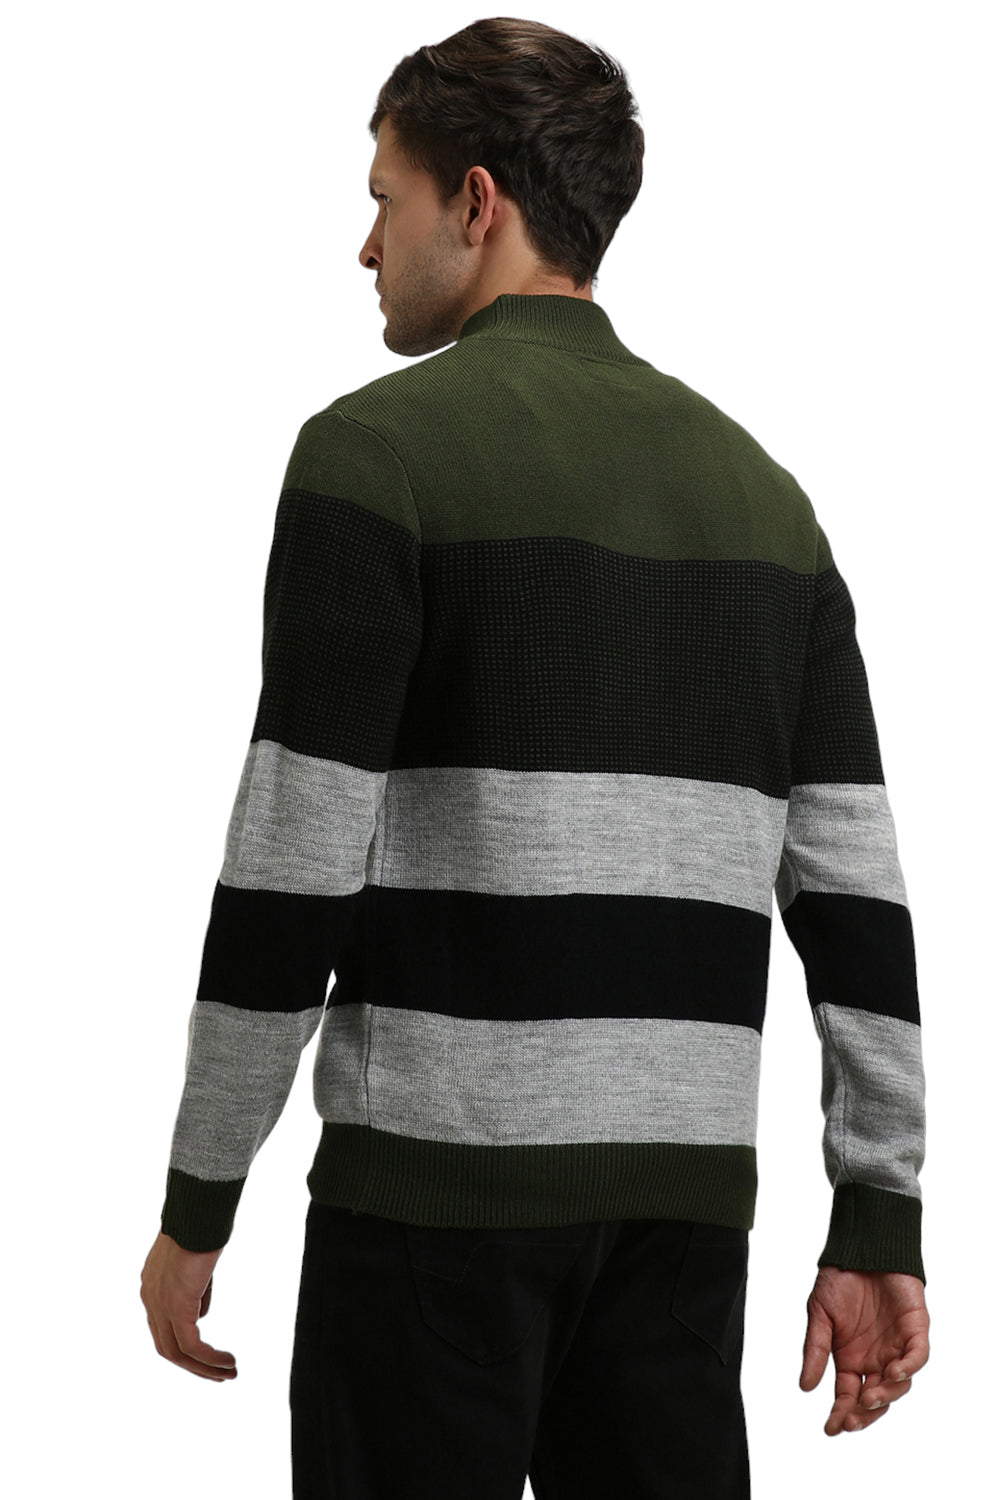 Dennis Lingo Men's Olive Striper Mock Full Sleeves Half Zip Sweater